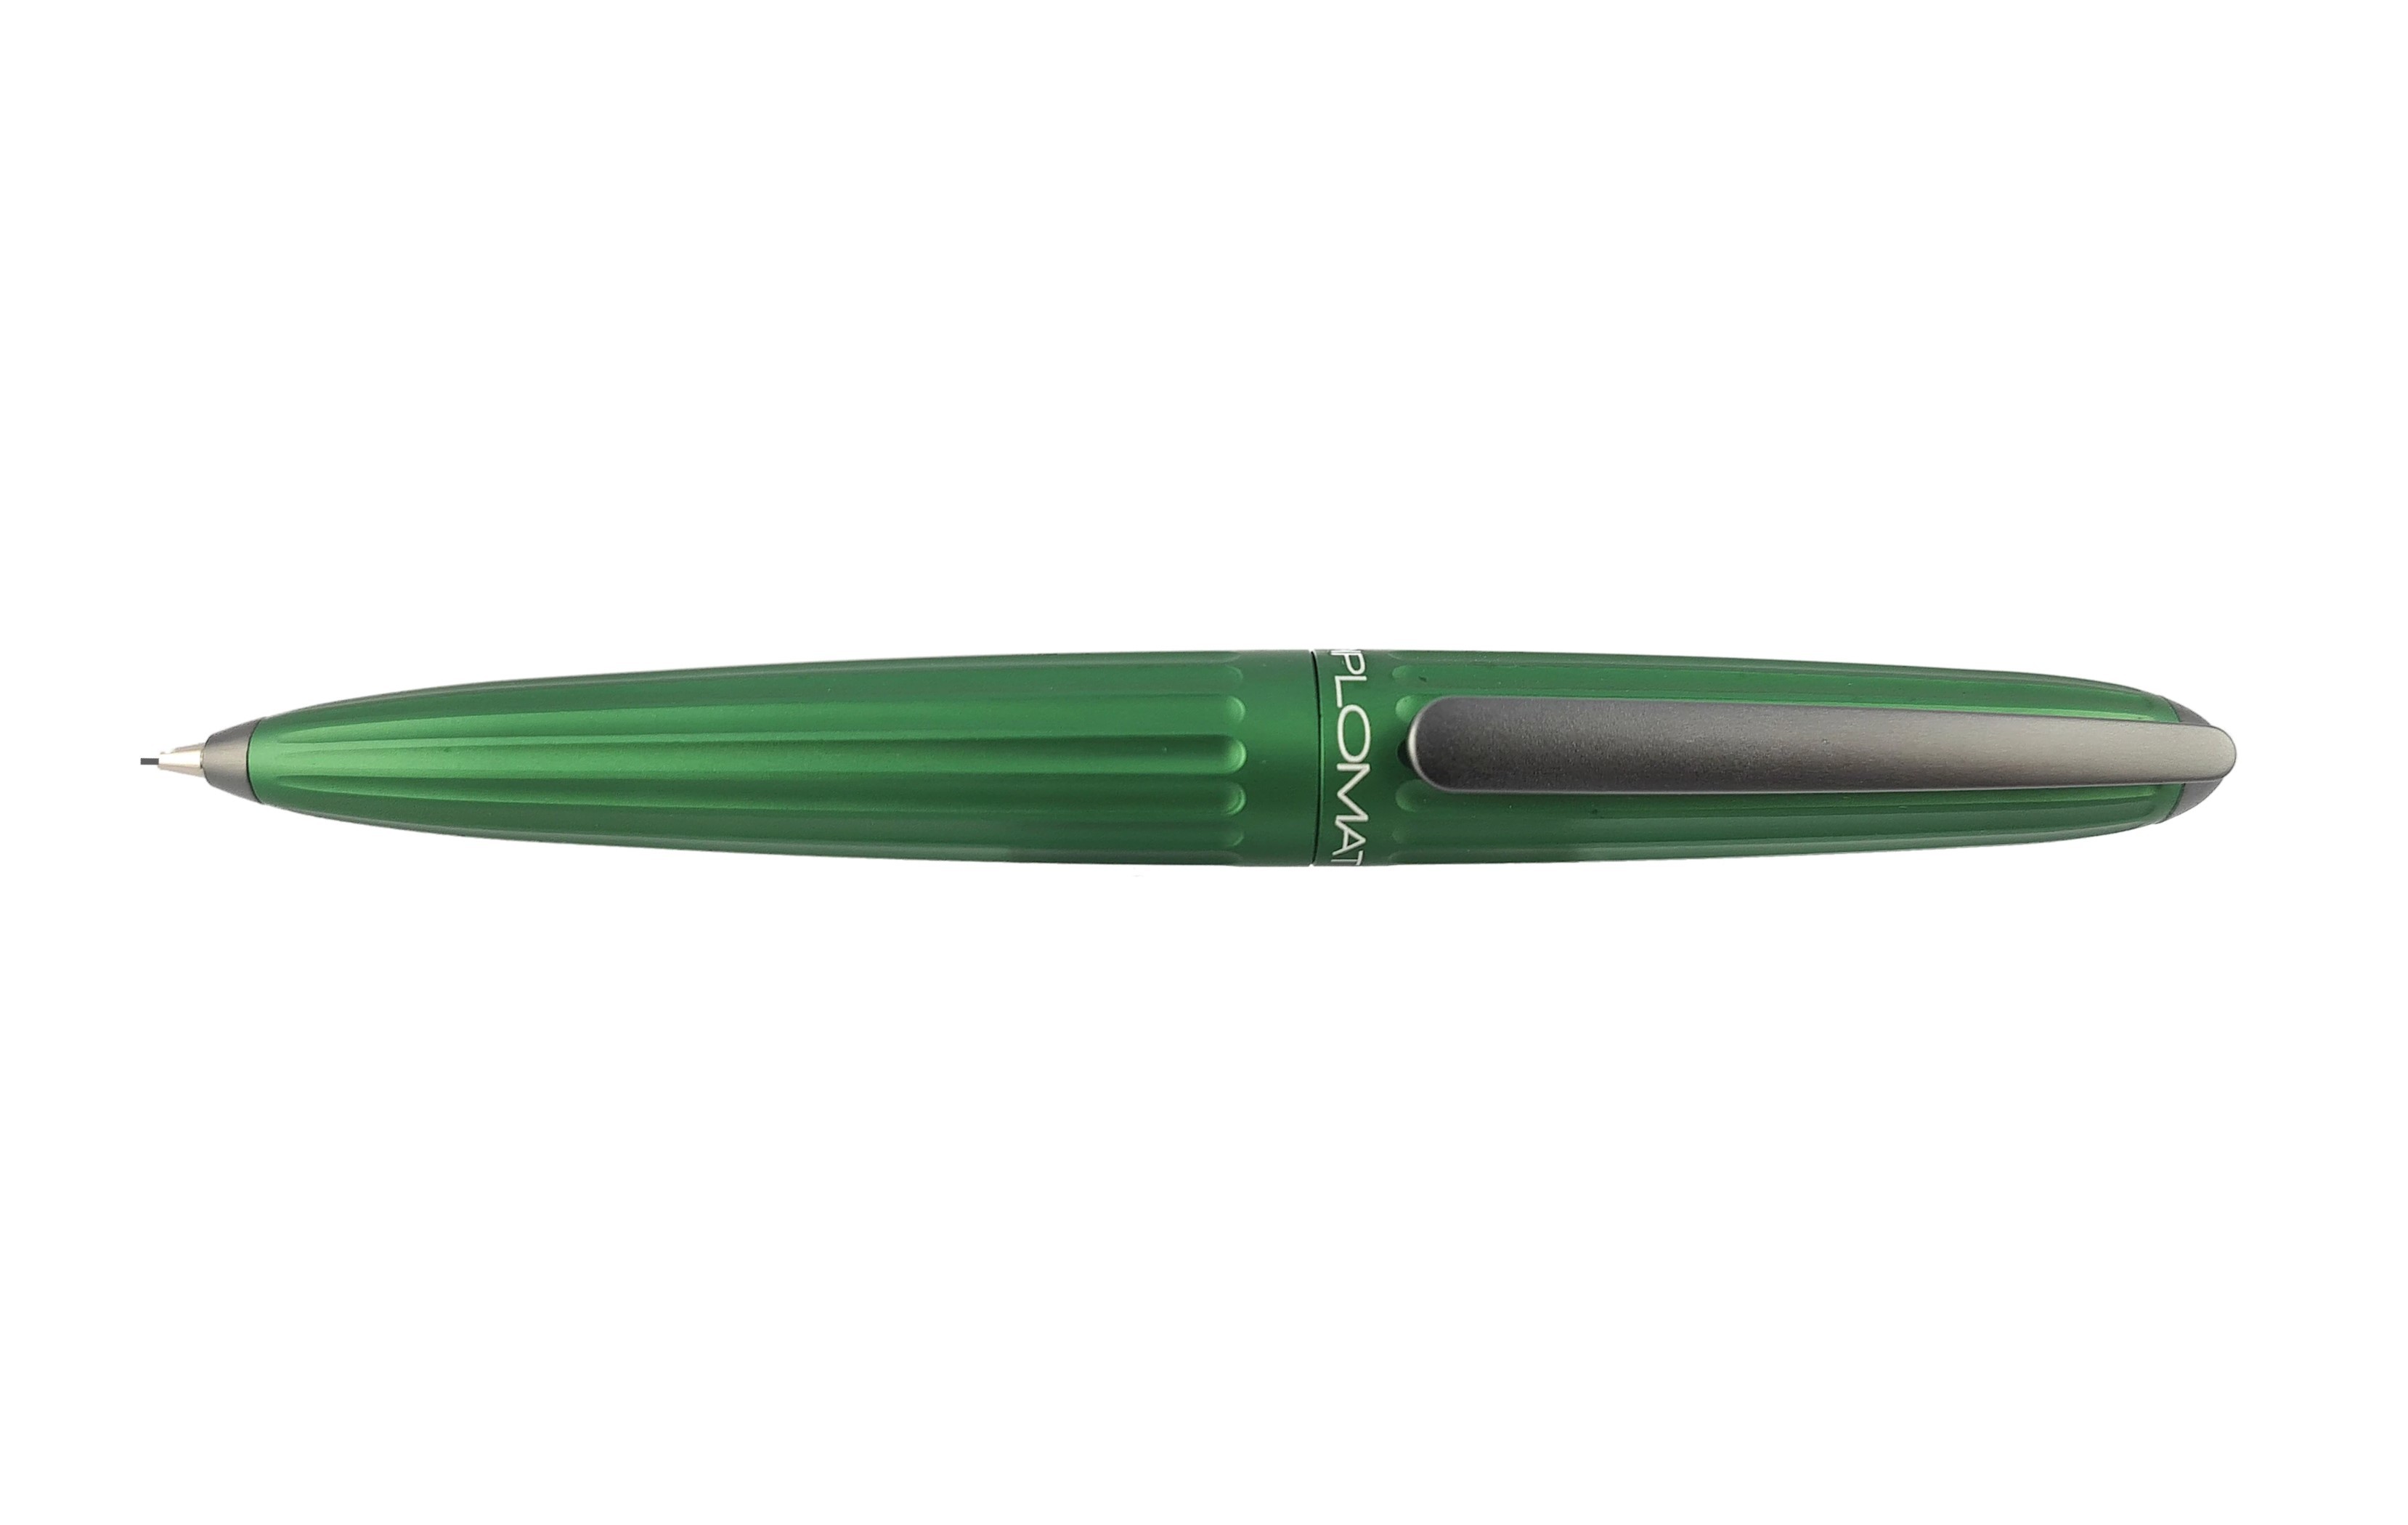 Diplomat Aero Green Mechanical Pencil